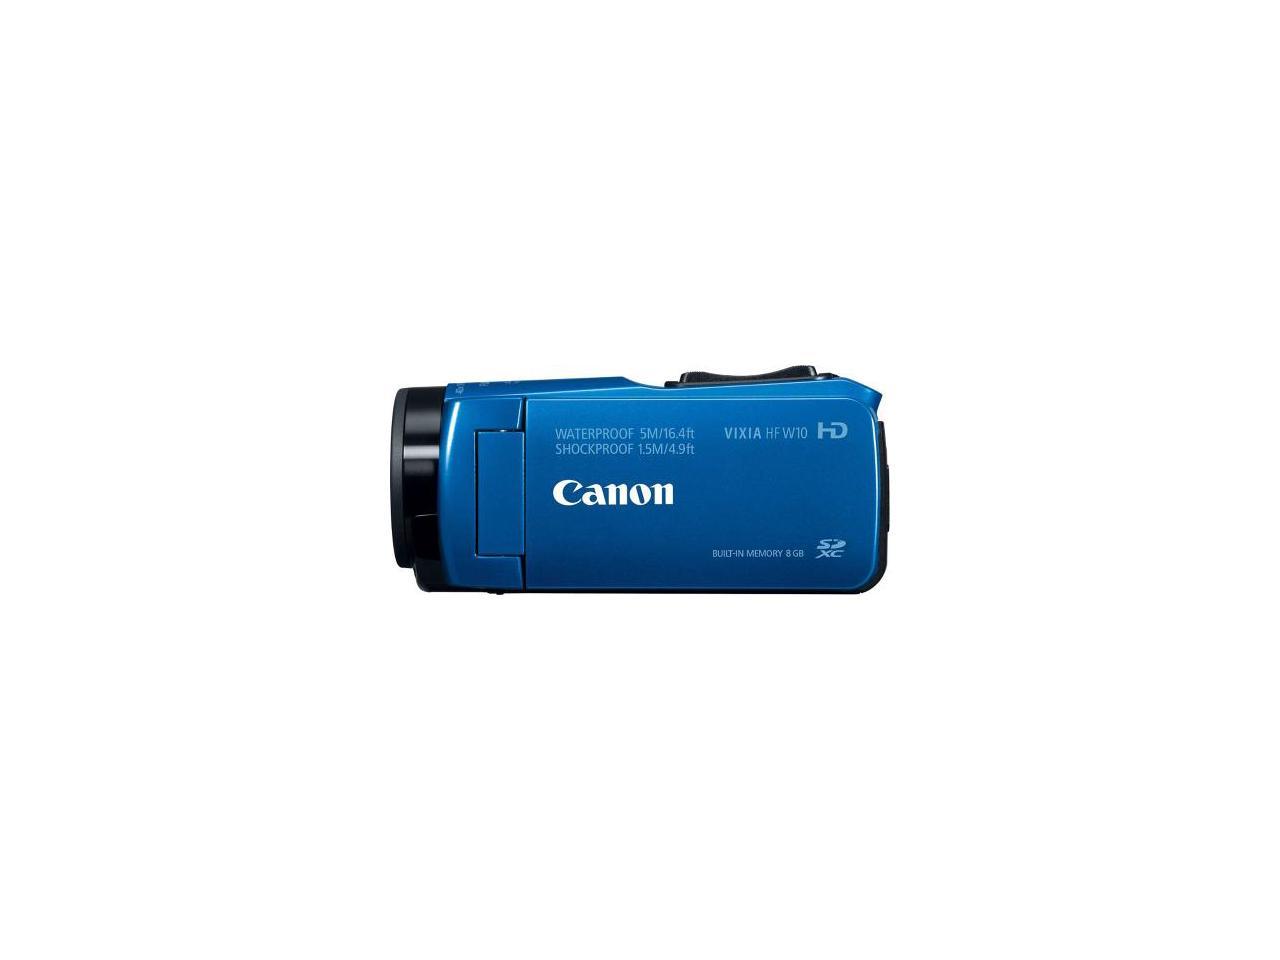 Canon VIXIA HF W10 Waterproof HD Camcorder - Blue Model: 3910C001